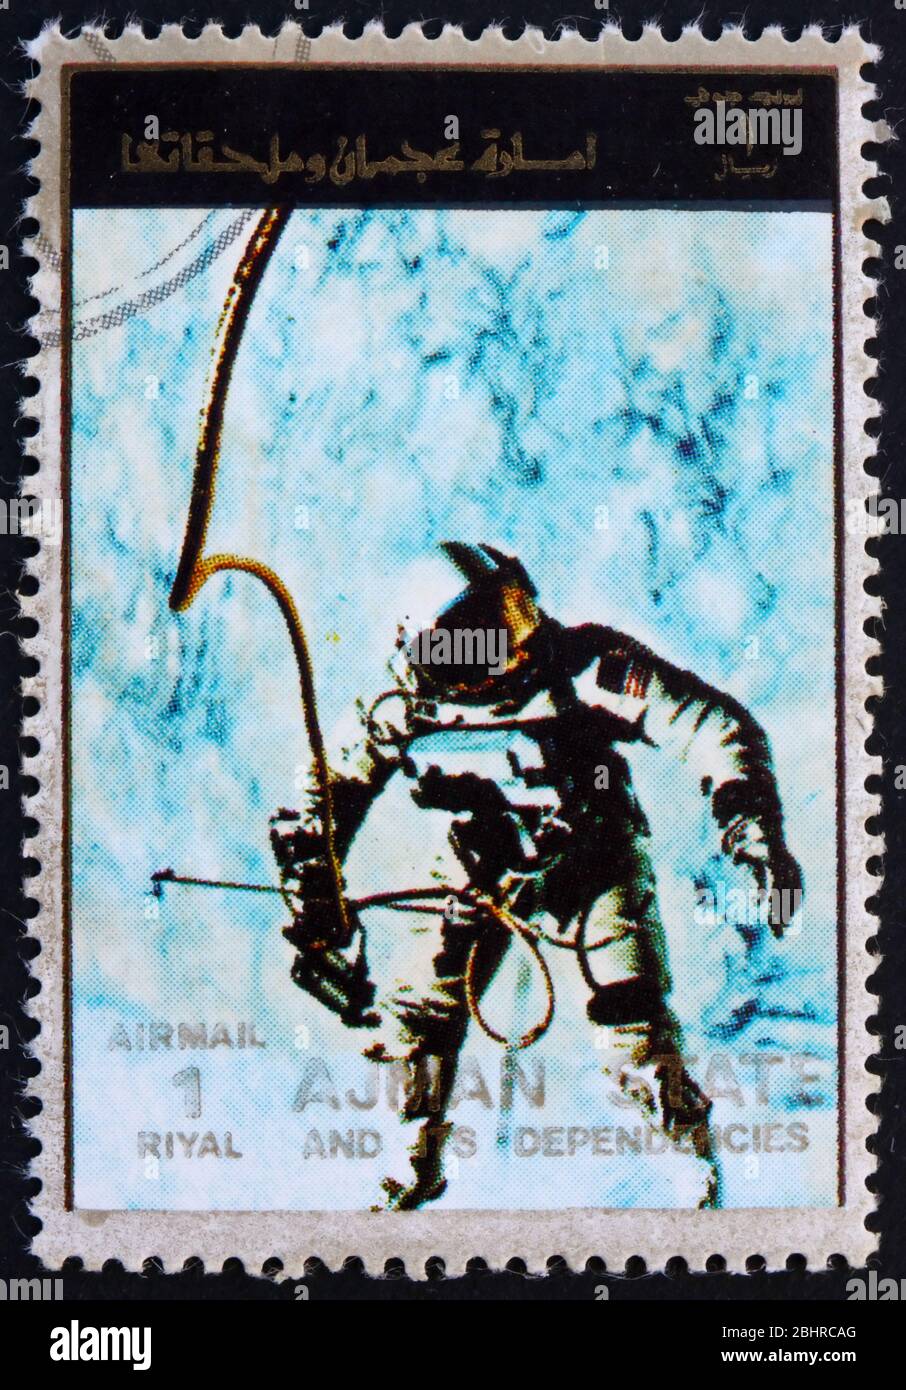 AJMAN - CIRCA 1973: a stamp printed in the Ajman shows Edward White during Spacewalk, Gemini 4, Spaceflight Program, circa 1973 Stock Photo